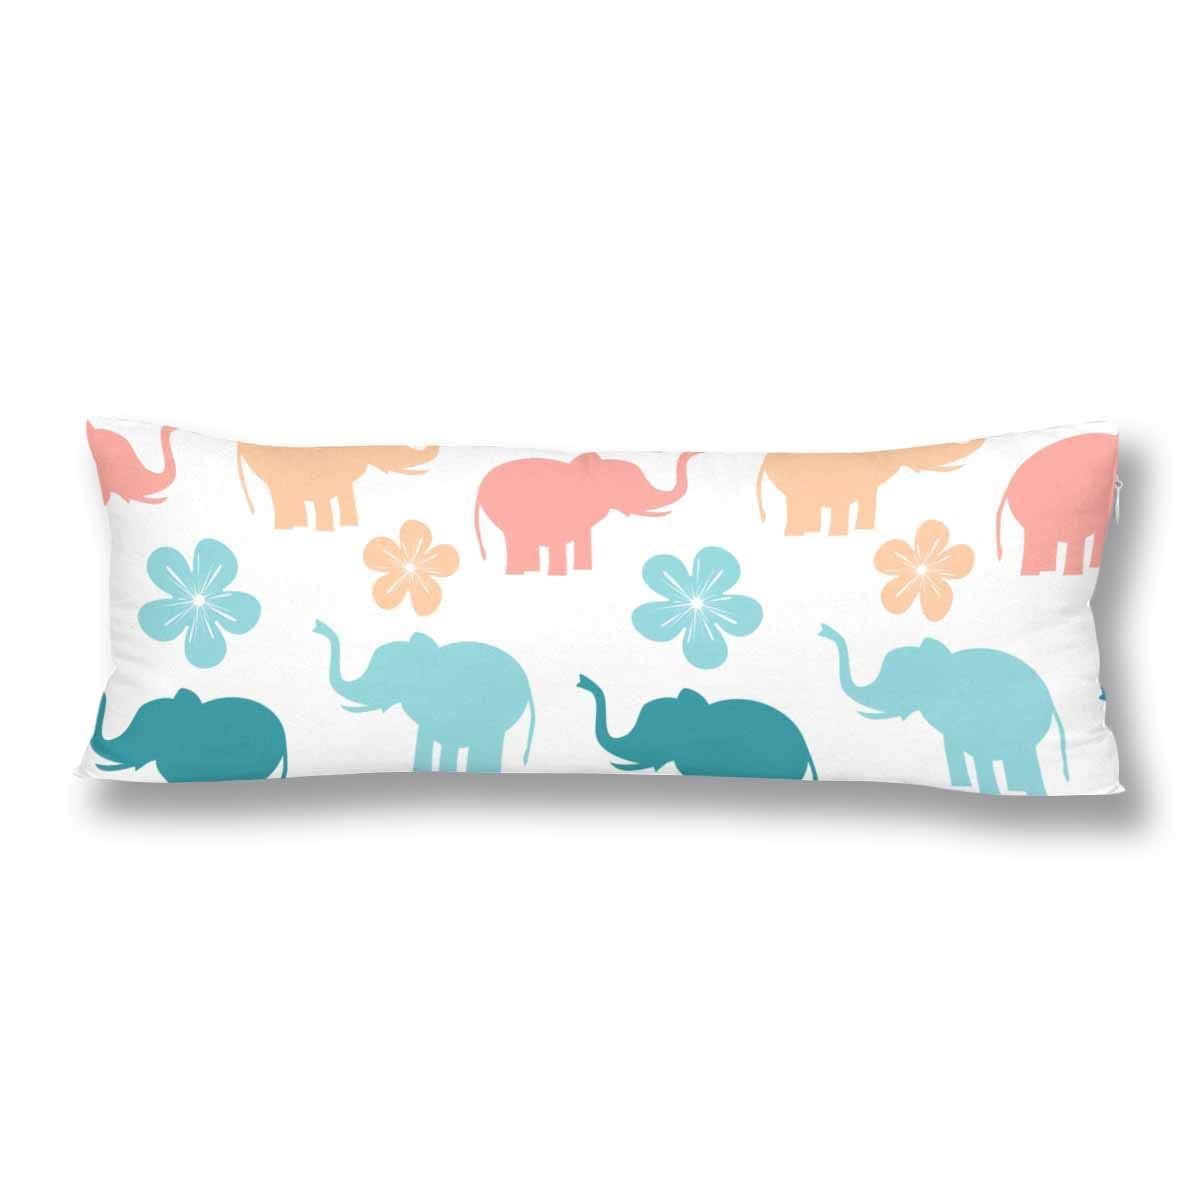 Gckg Cute Colorful Elephants Flowers Body Pillow Covers Case